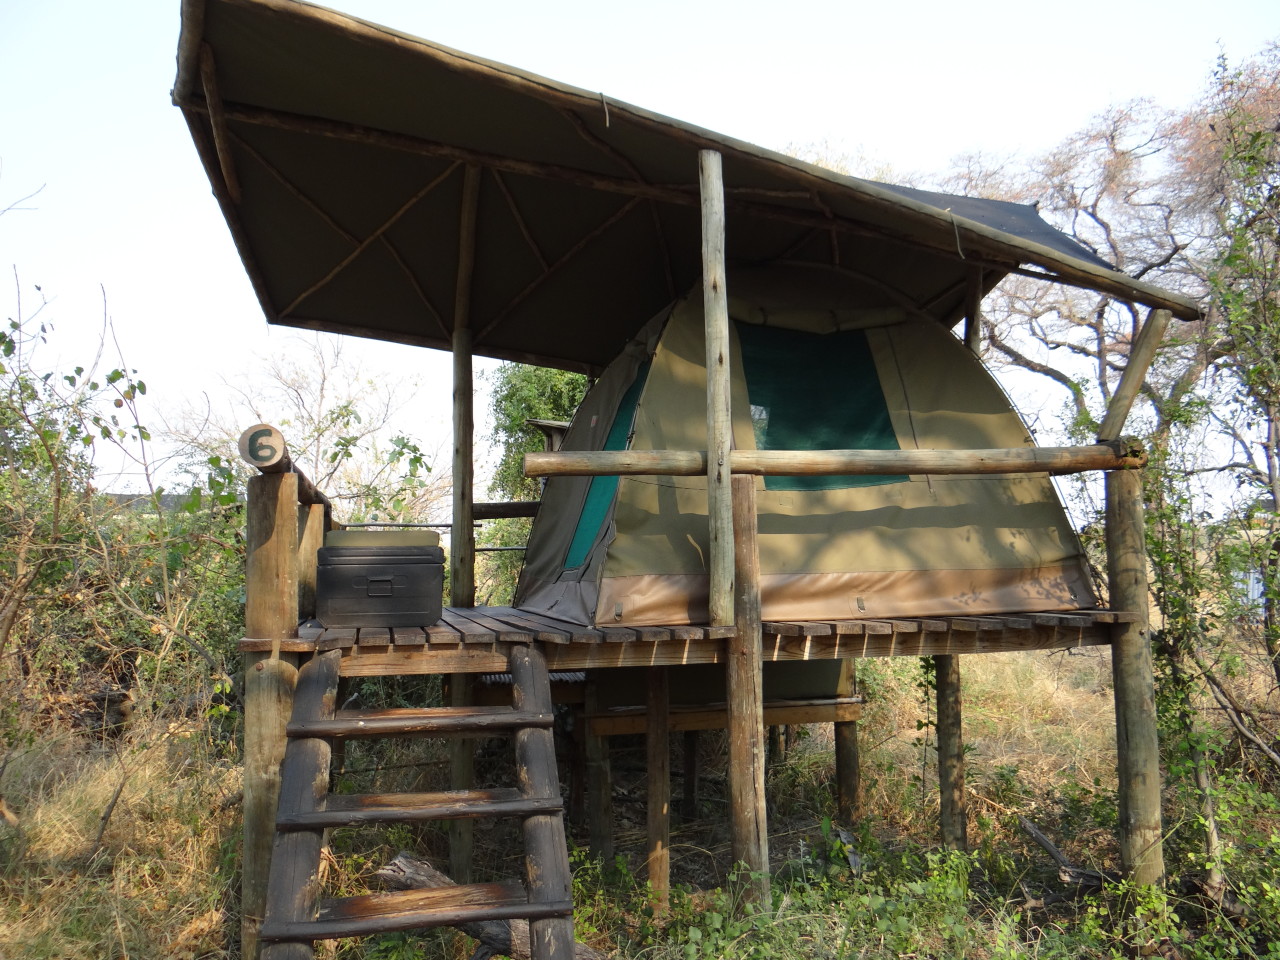 Oddballs' Camp Safari Tent